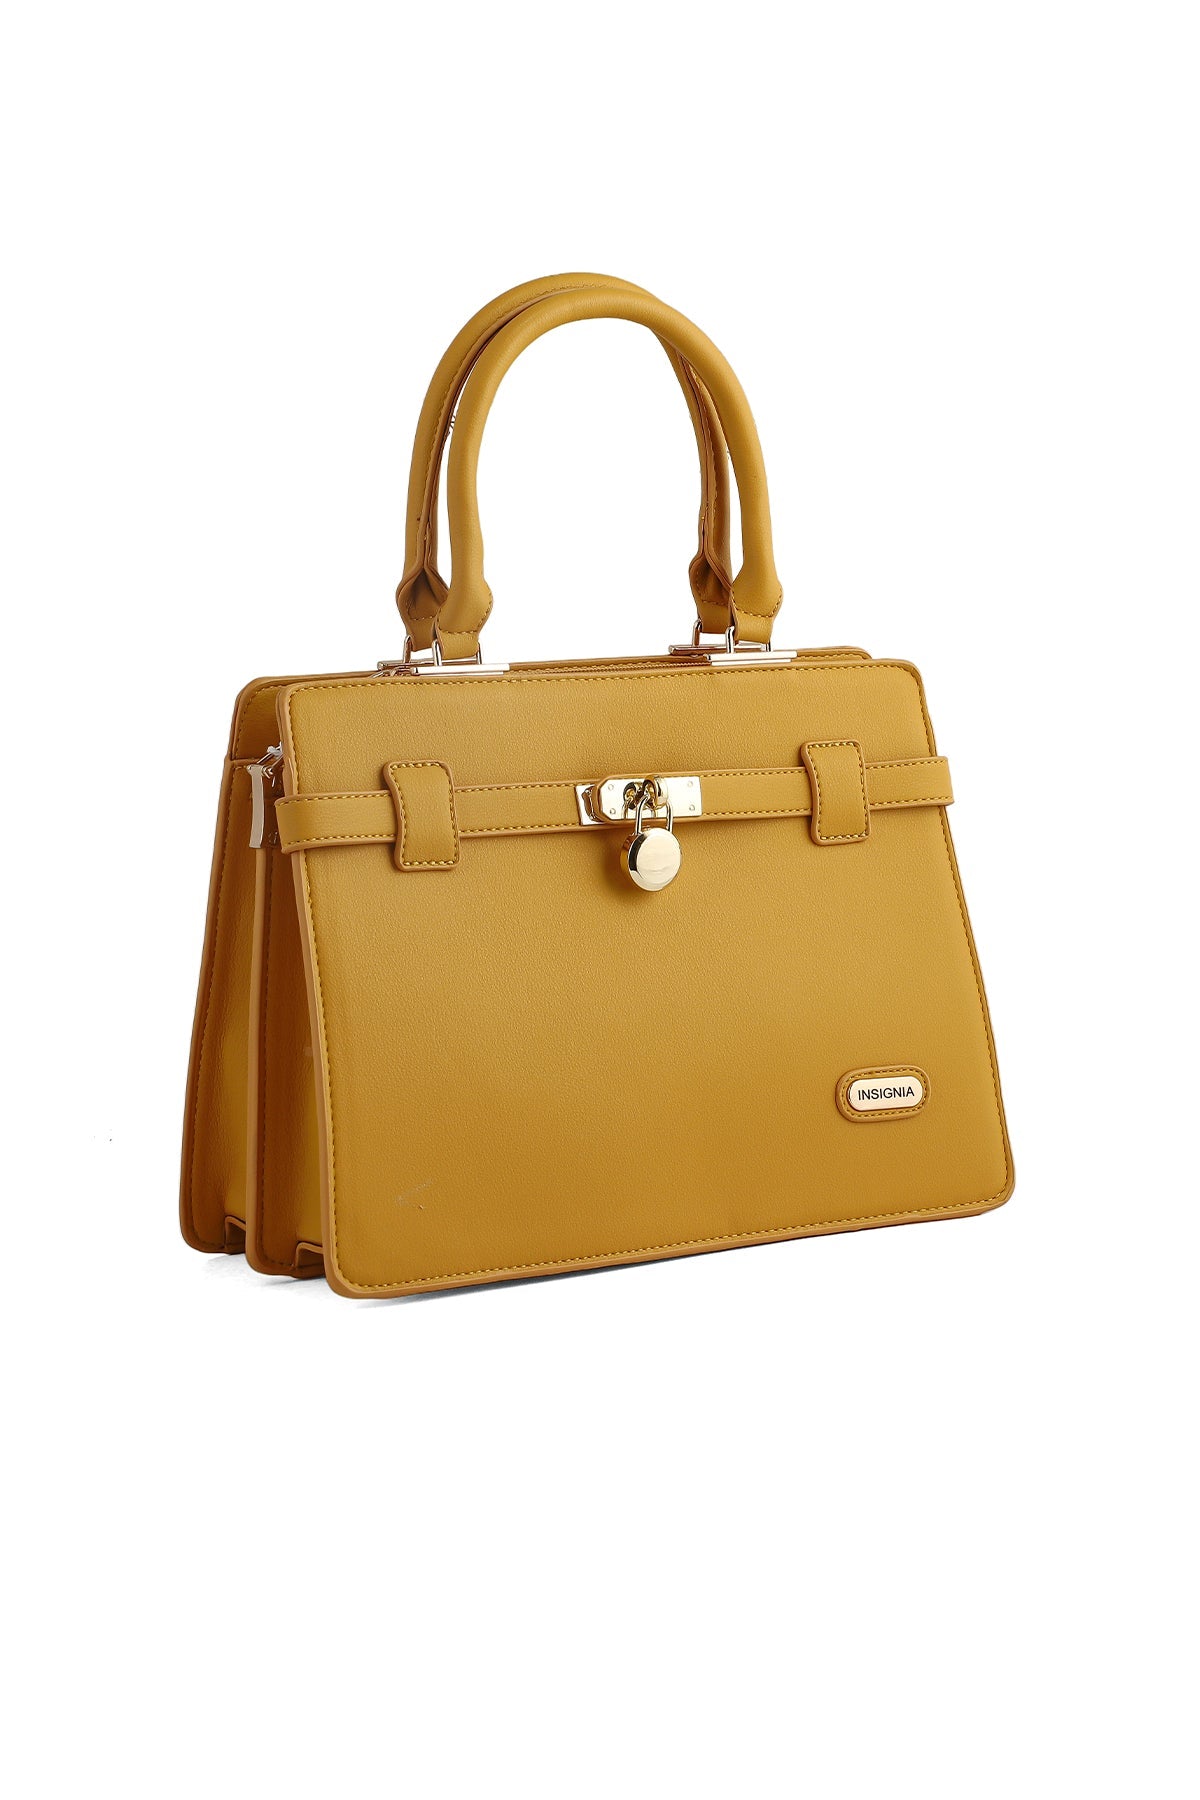 Formal Tote Hand Bags B14990-Yellow